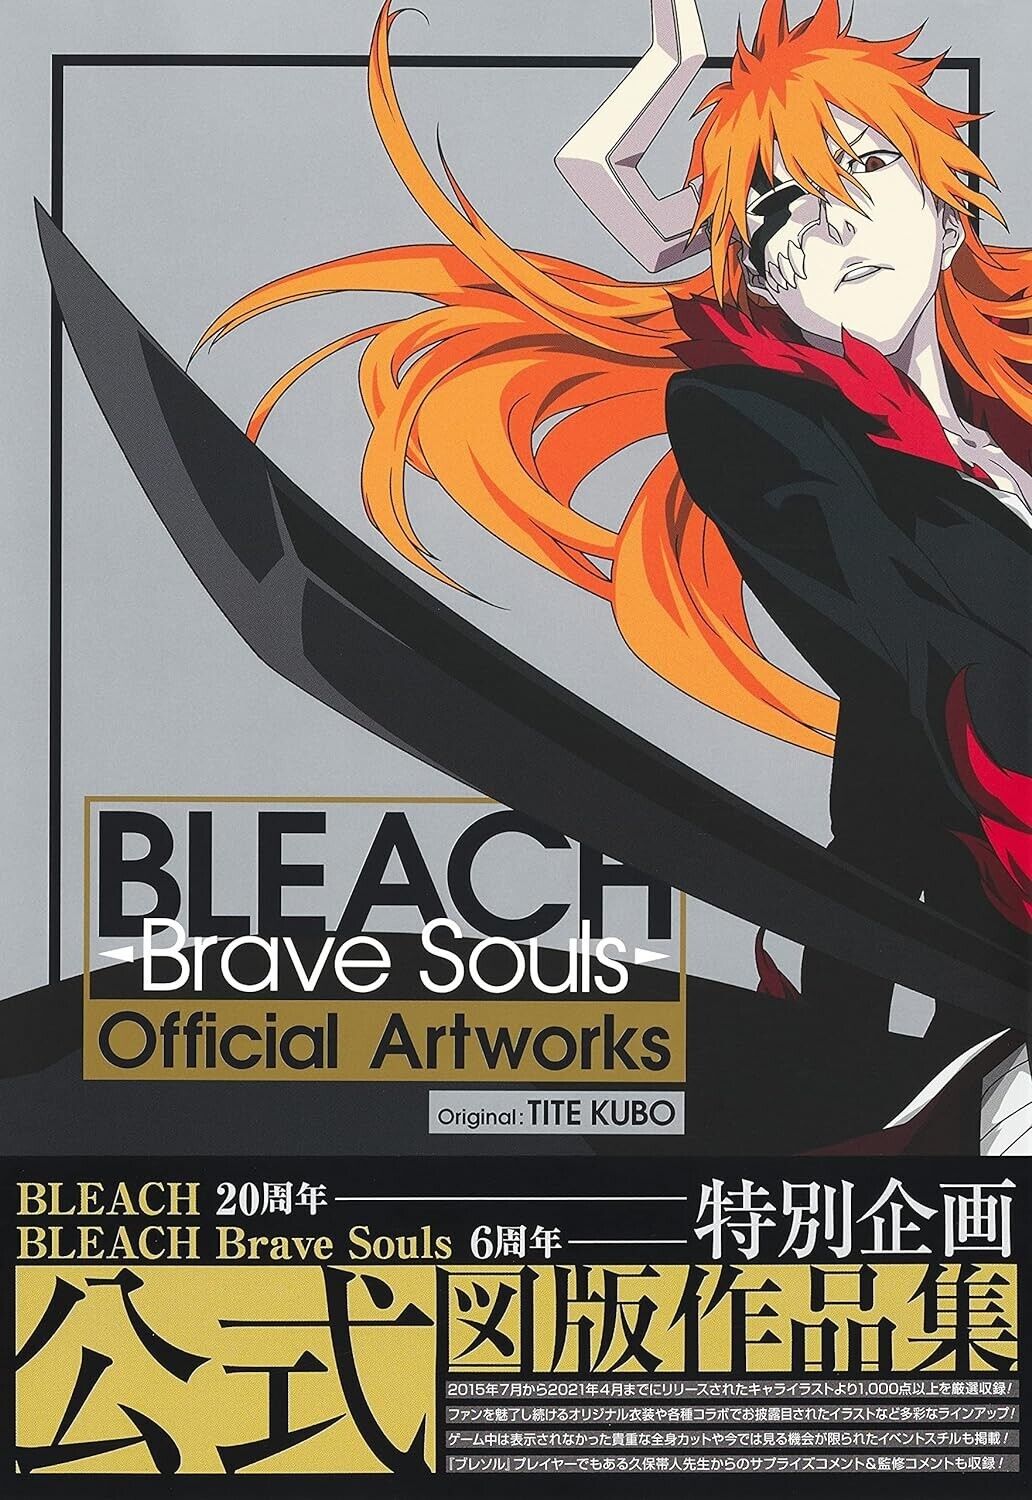 BLEACH Brave Souls Official Artworks Art Book Illustration Tite Kubo JAPAN